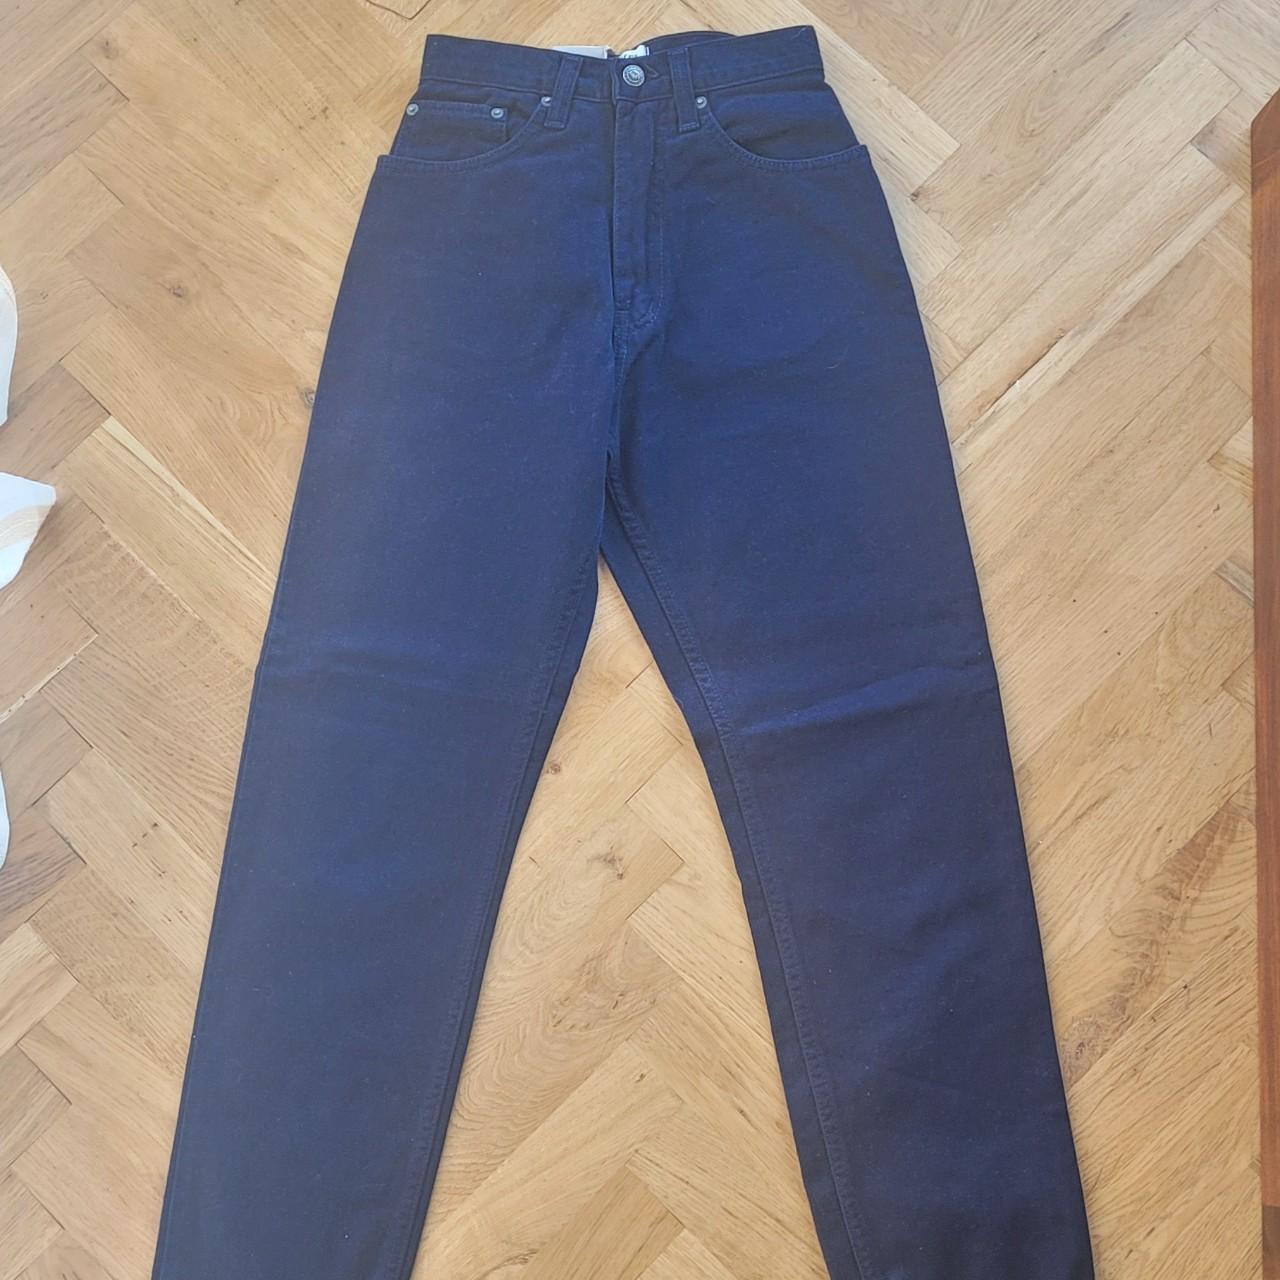 Vintage Falmer high-waisted Mom jeans never worn W26... - Depop